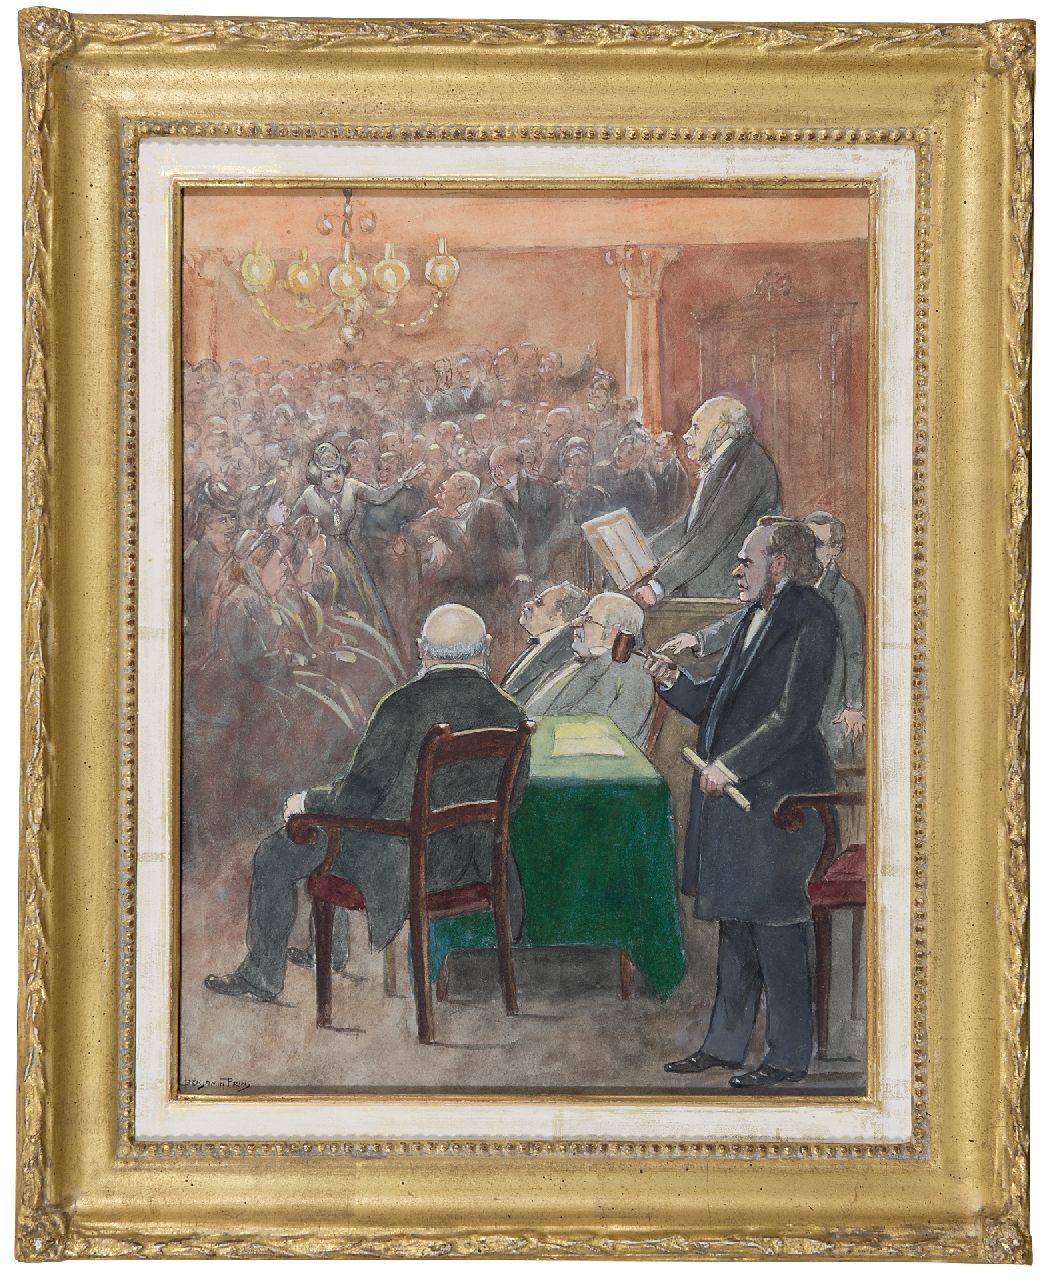 Prins B.L.  | 'Benjamin' Liepman Prins, De onwelkome onderbreking, aquarel op papier 29,5 x 21,4 cm, gesigneerd linksonder